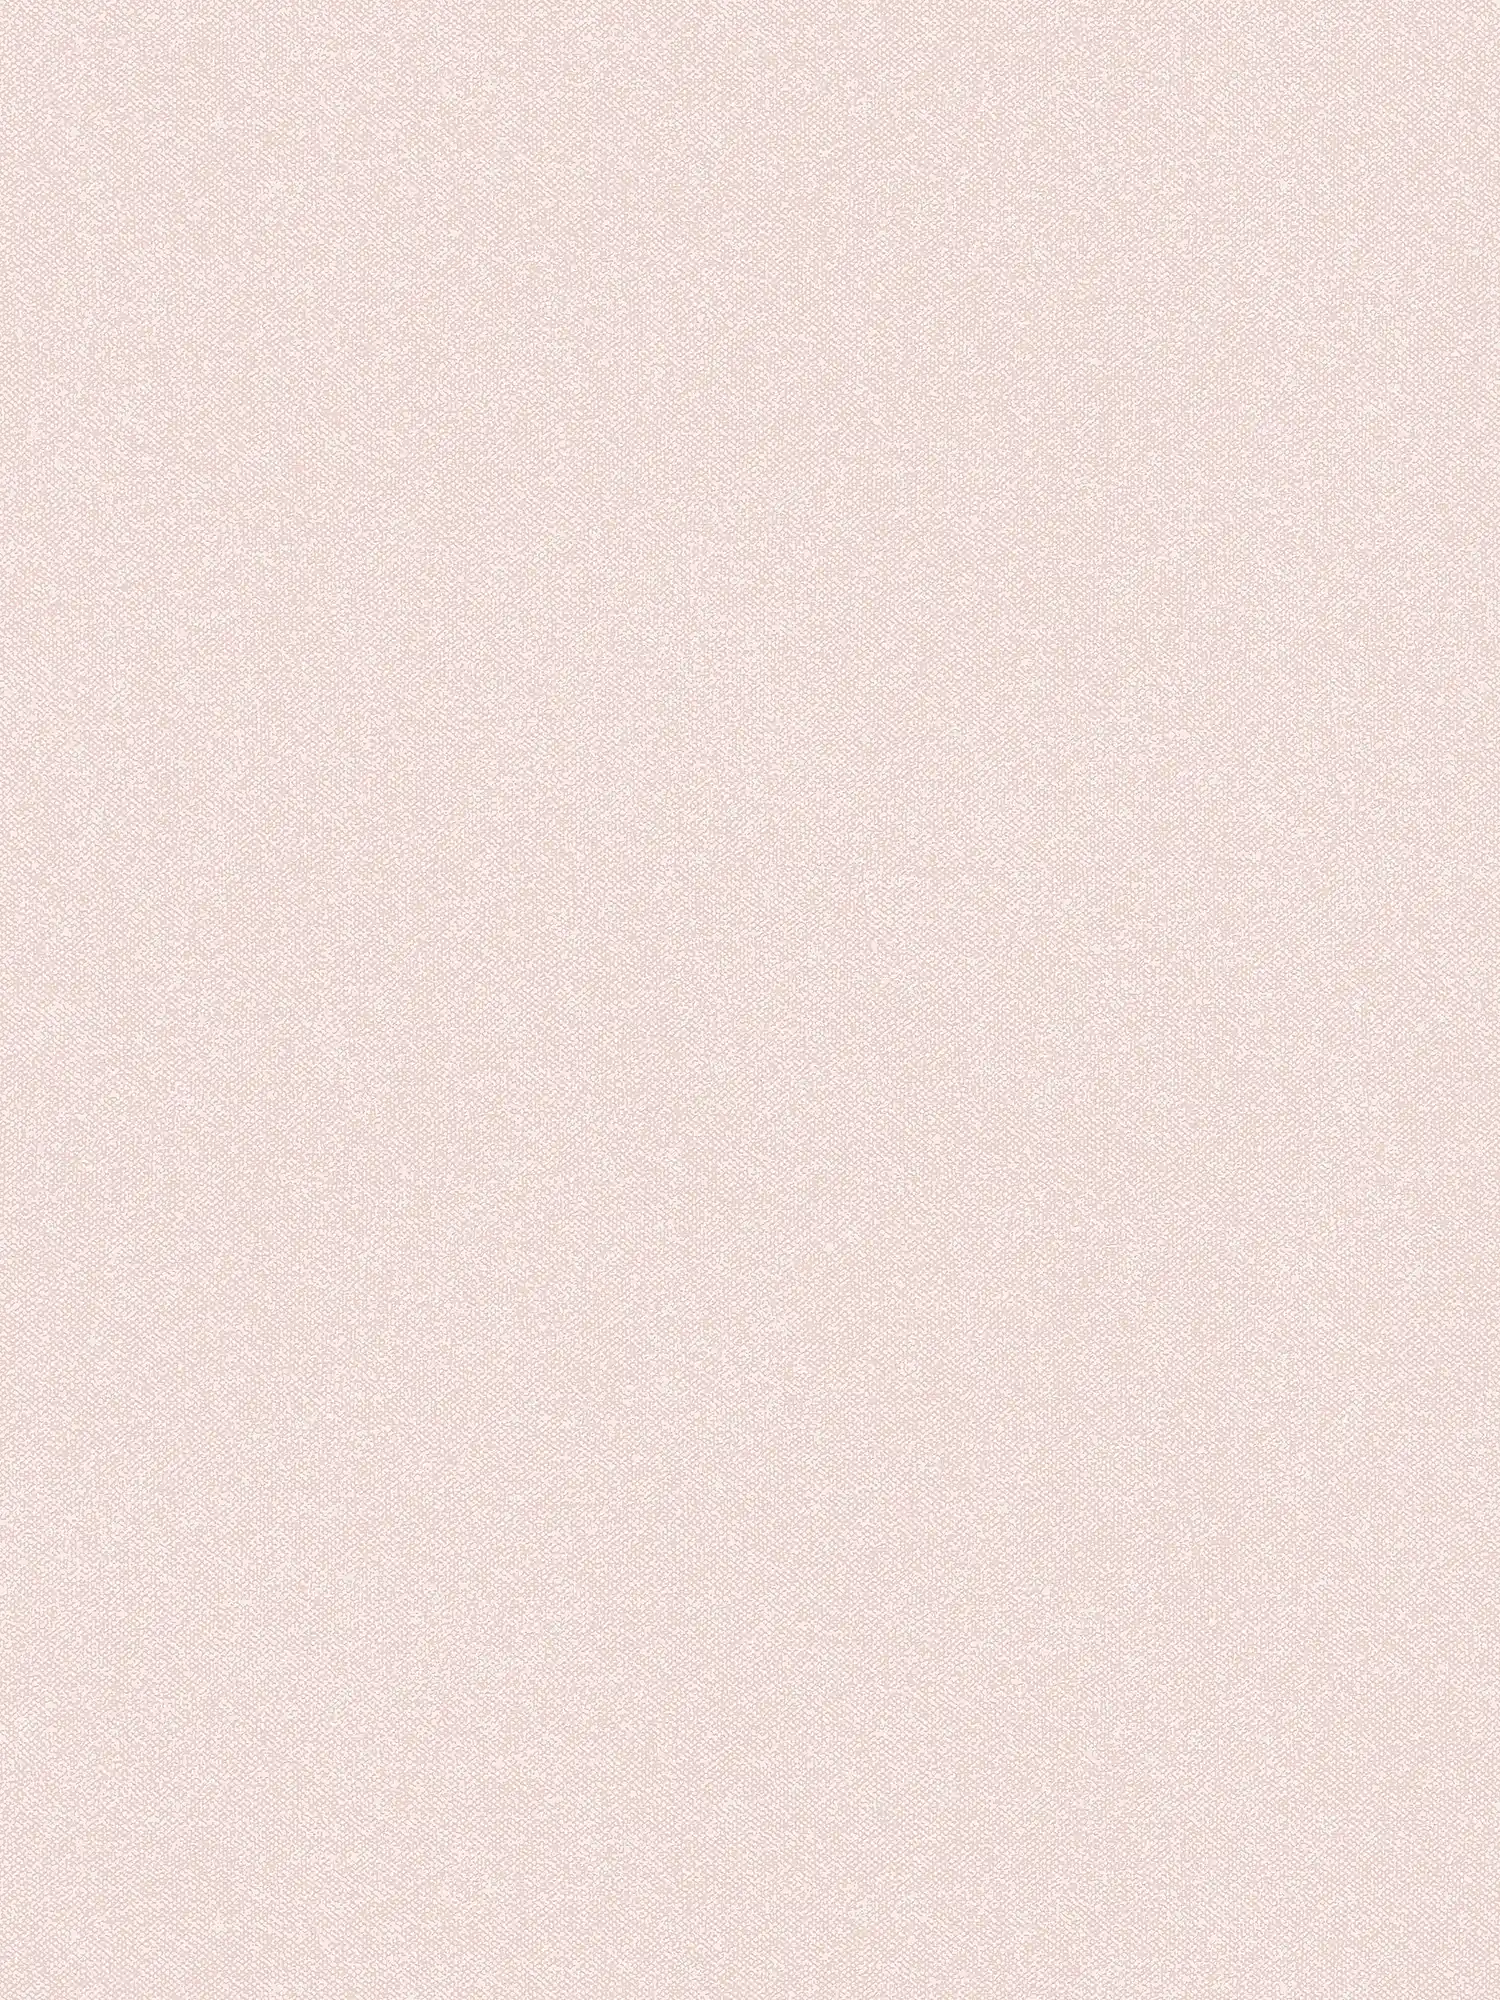 Textile optics wallpaper plain - pink, cream, white
